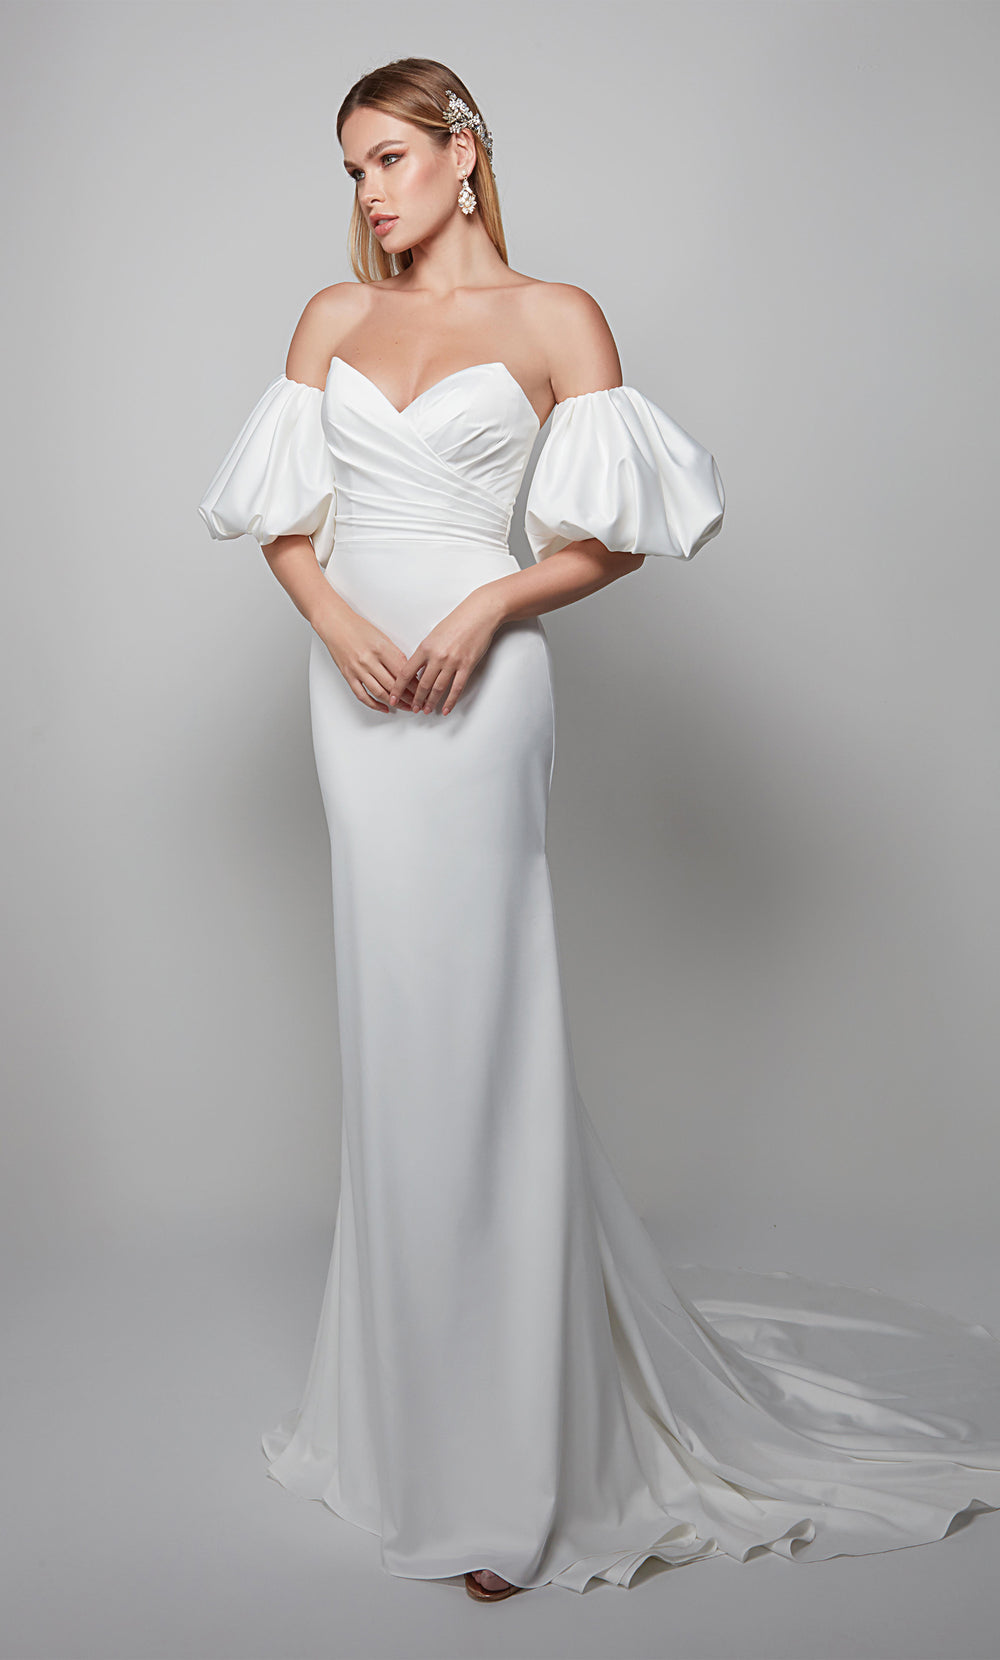 Silk long gown | Simple gown design, Long dress design, Long gown design